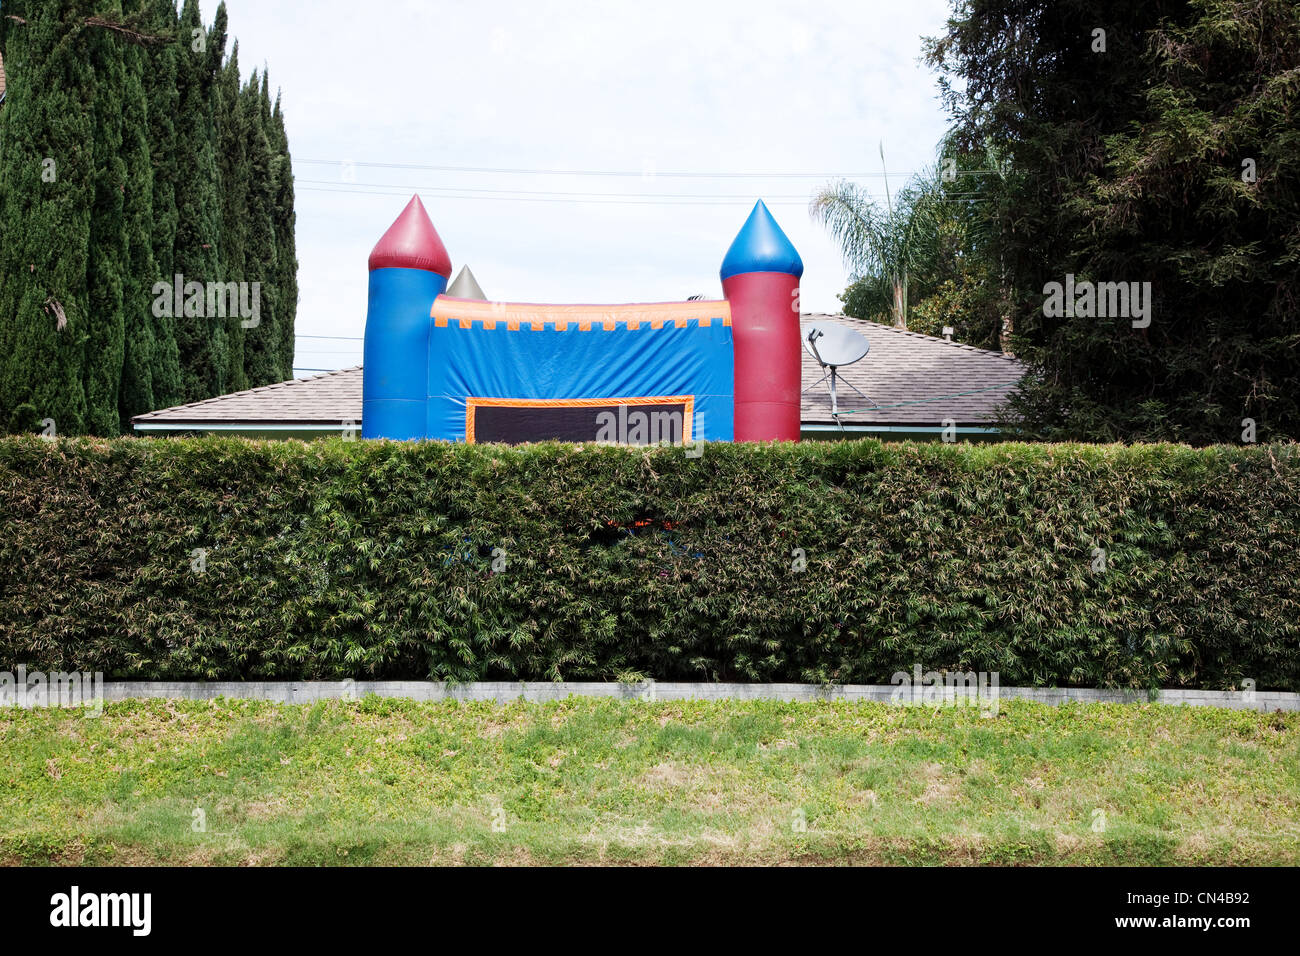 Inflatable bouncy castle on suburban street Stock Photo